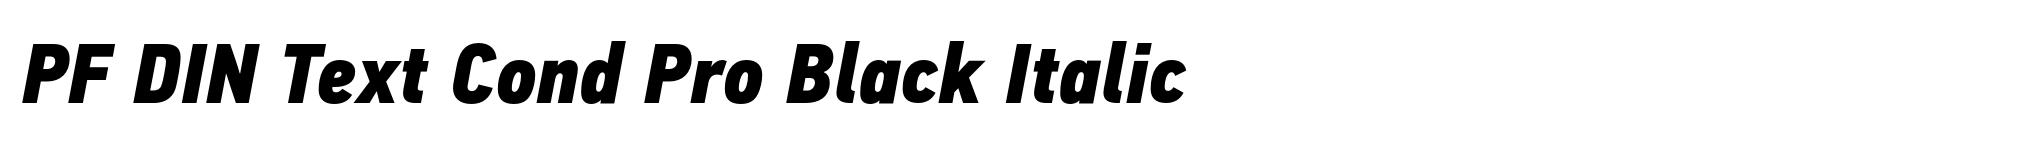 PF DIN Text Cond Pro Black Italic image